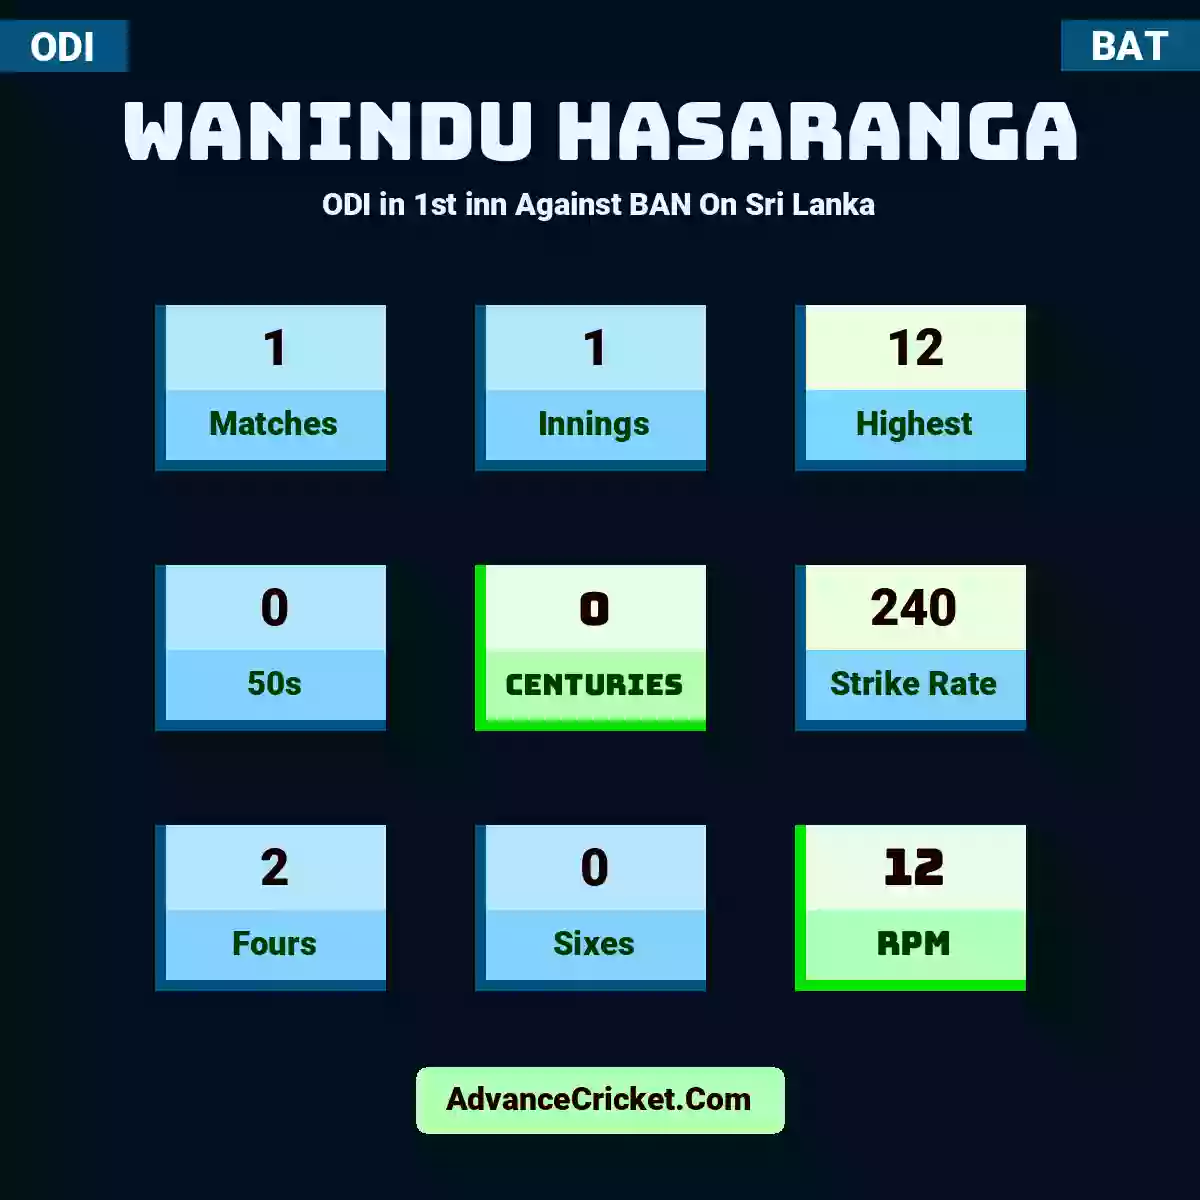 Wanindu Hasaranga ODI  in 1st inn Against BAN On Sri Lanka, Wanindu Hasaranga played 1 matches, scored 12 runs as highest, 0 half-centuries, and 0 centuries, with a strike rate of 240. W.Hasaranga hit 2 fours and 0 sixes, with an RPM of 12.